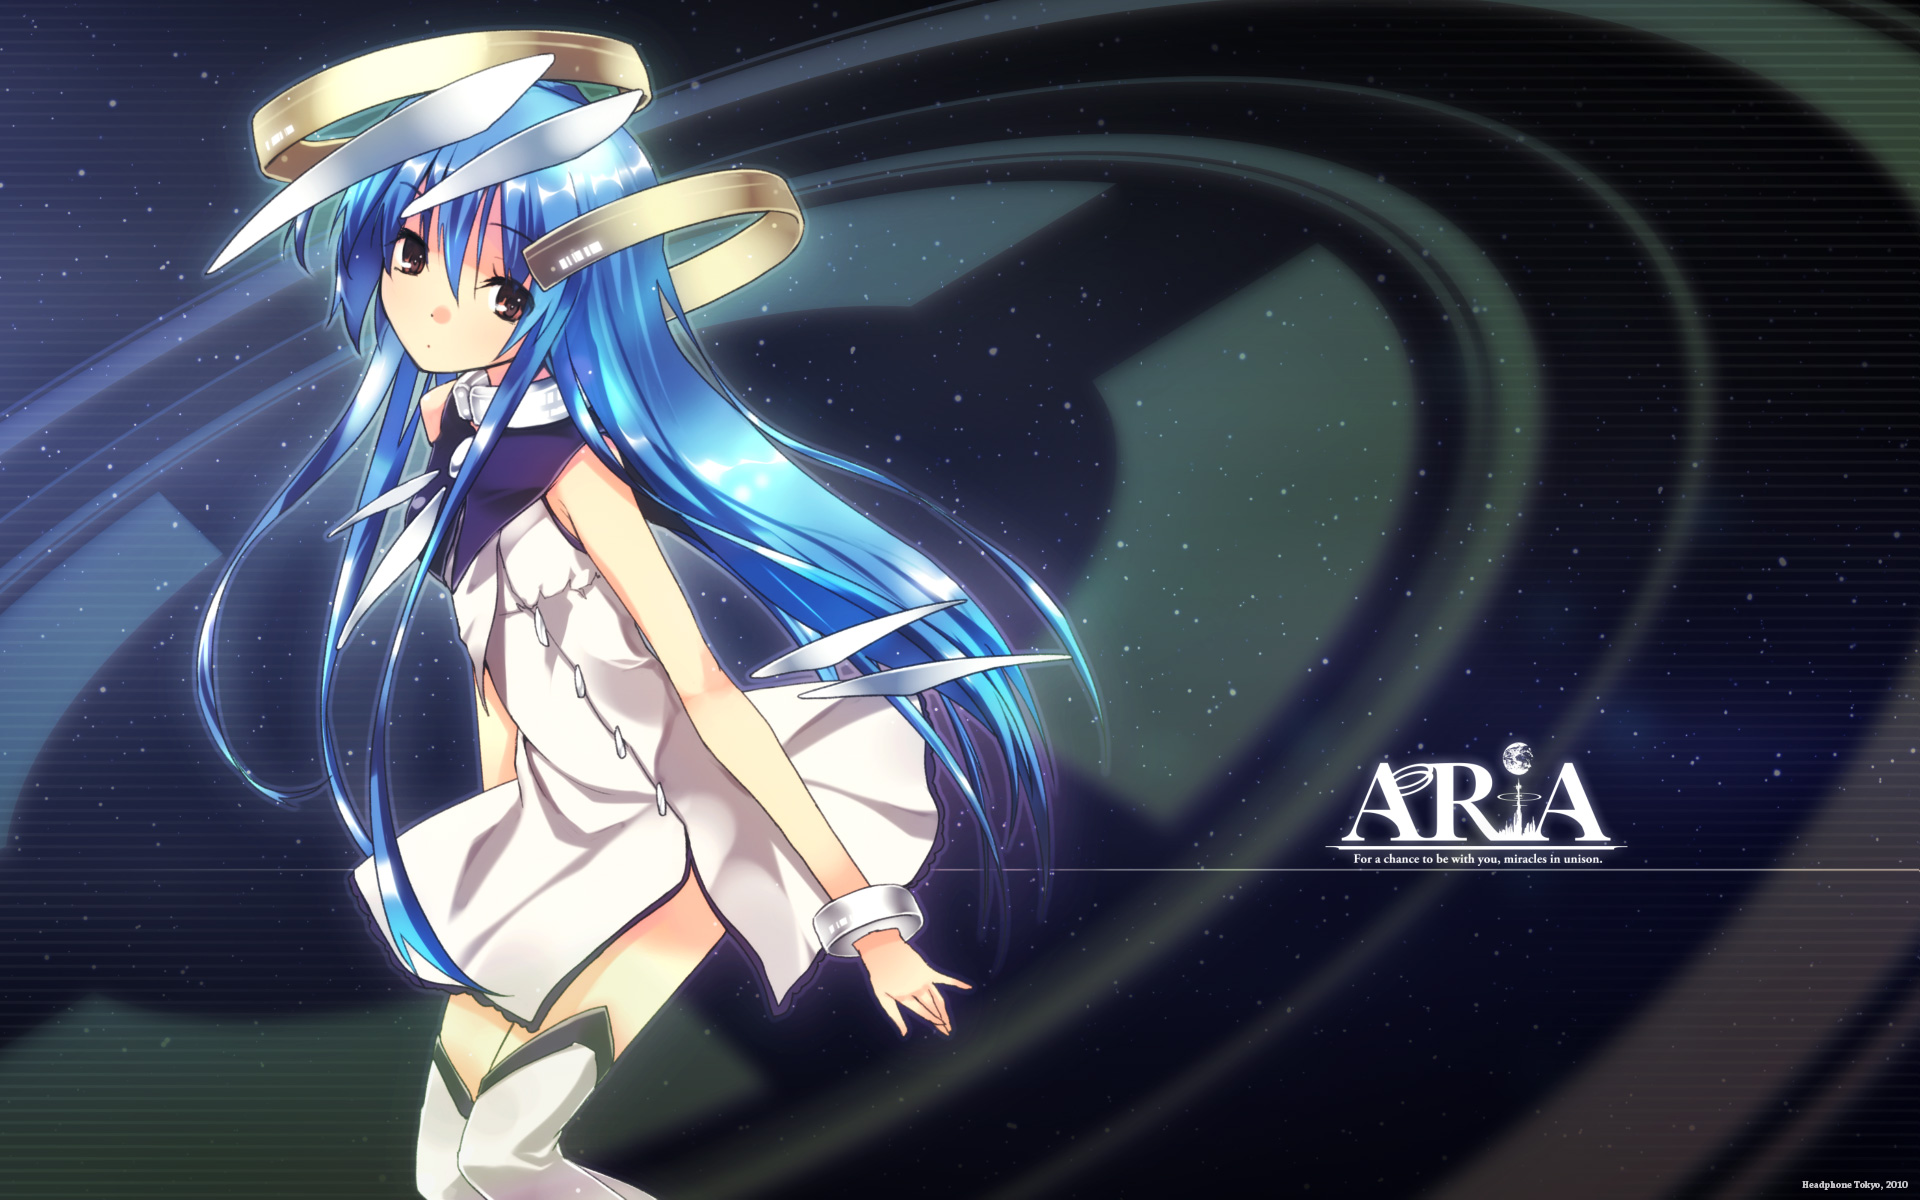 172348 descargar imagen animado, aria, aria (anime), espacio: fondos de pantalla y protectores de pantalla gratis